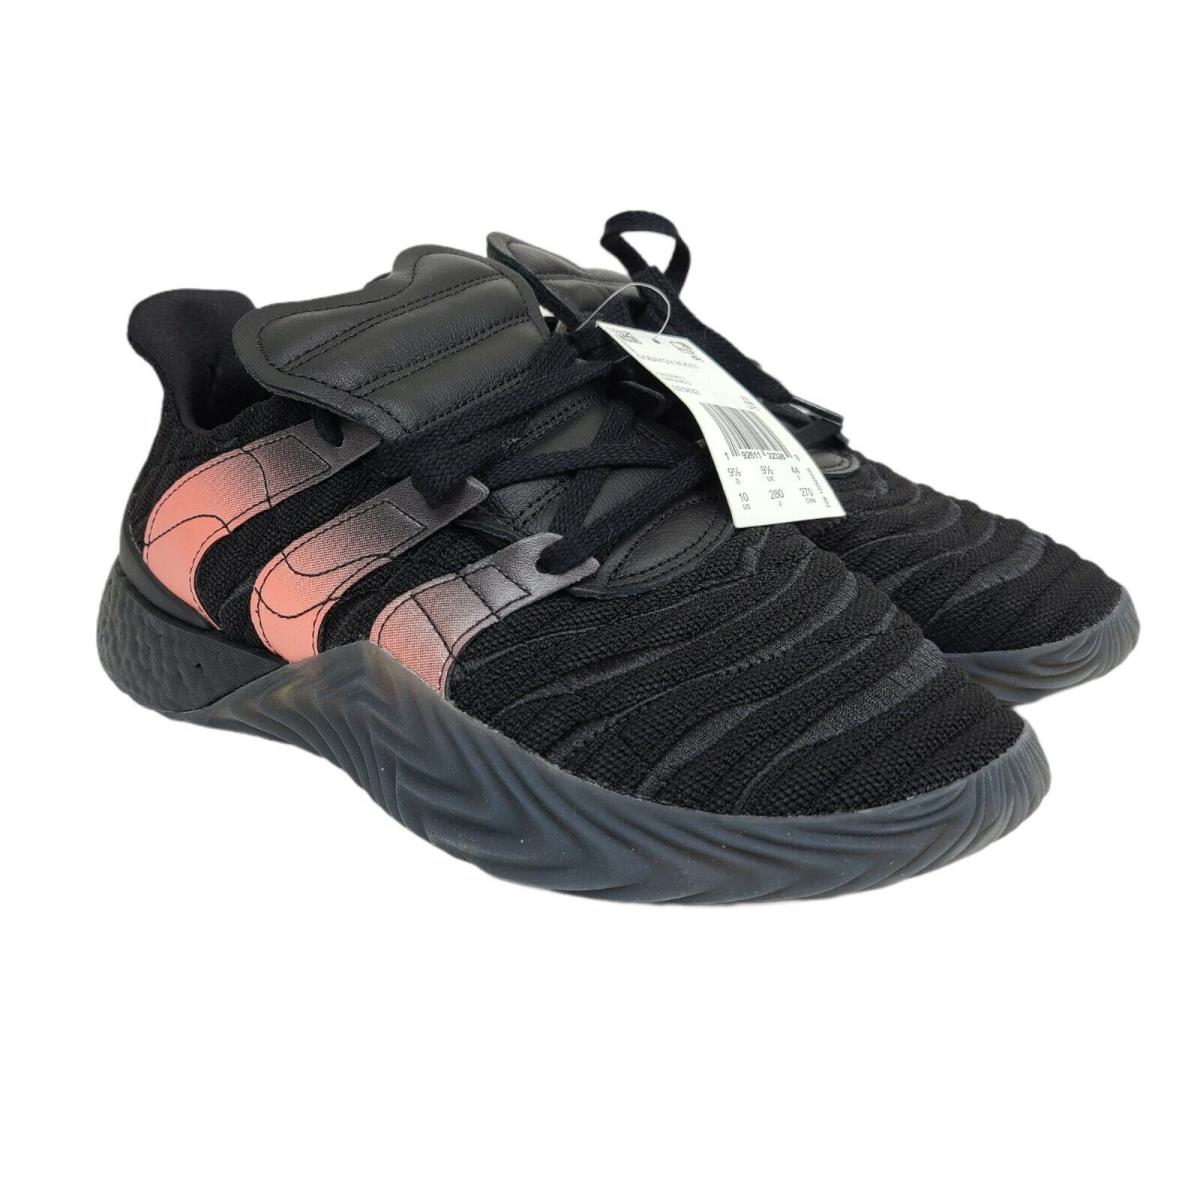 Adidas shoes Sobakov - Black, Manufacturer: core black/solar orange/core black 0